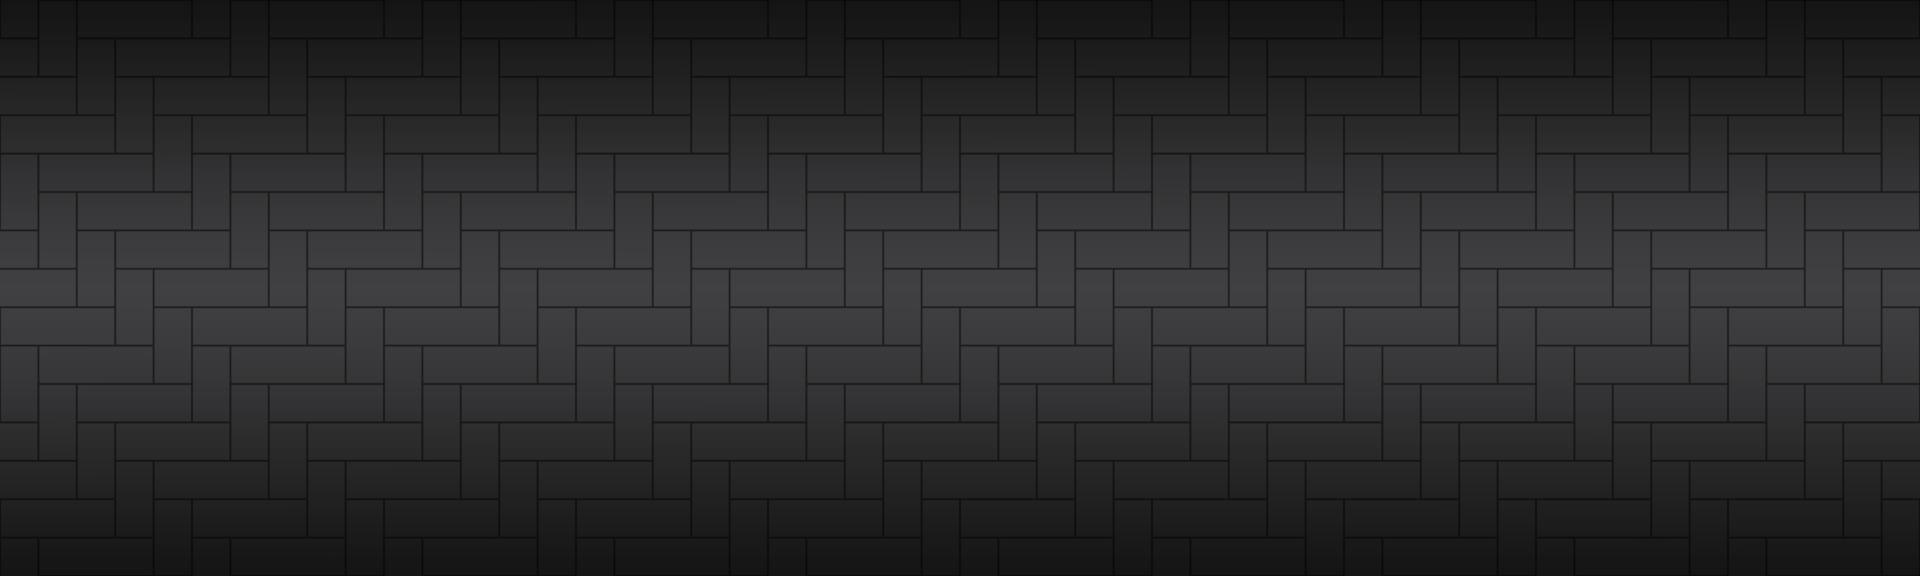 Modern black brick pattern. Seamless tile header. Simple vector illustration